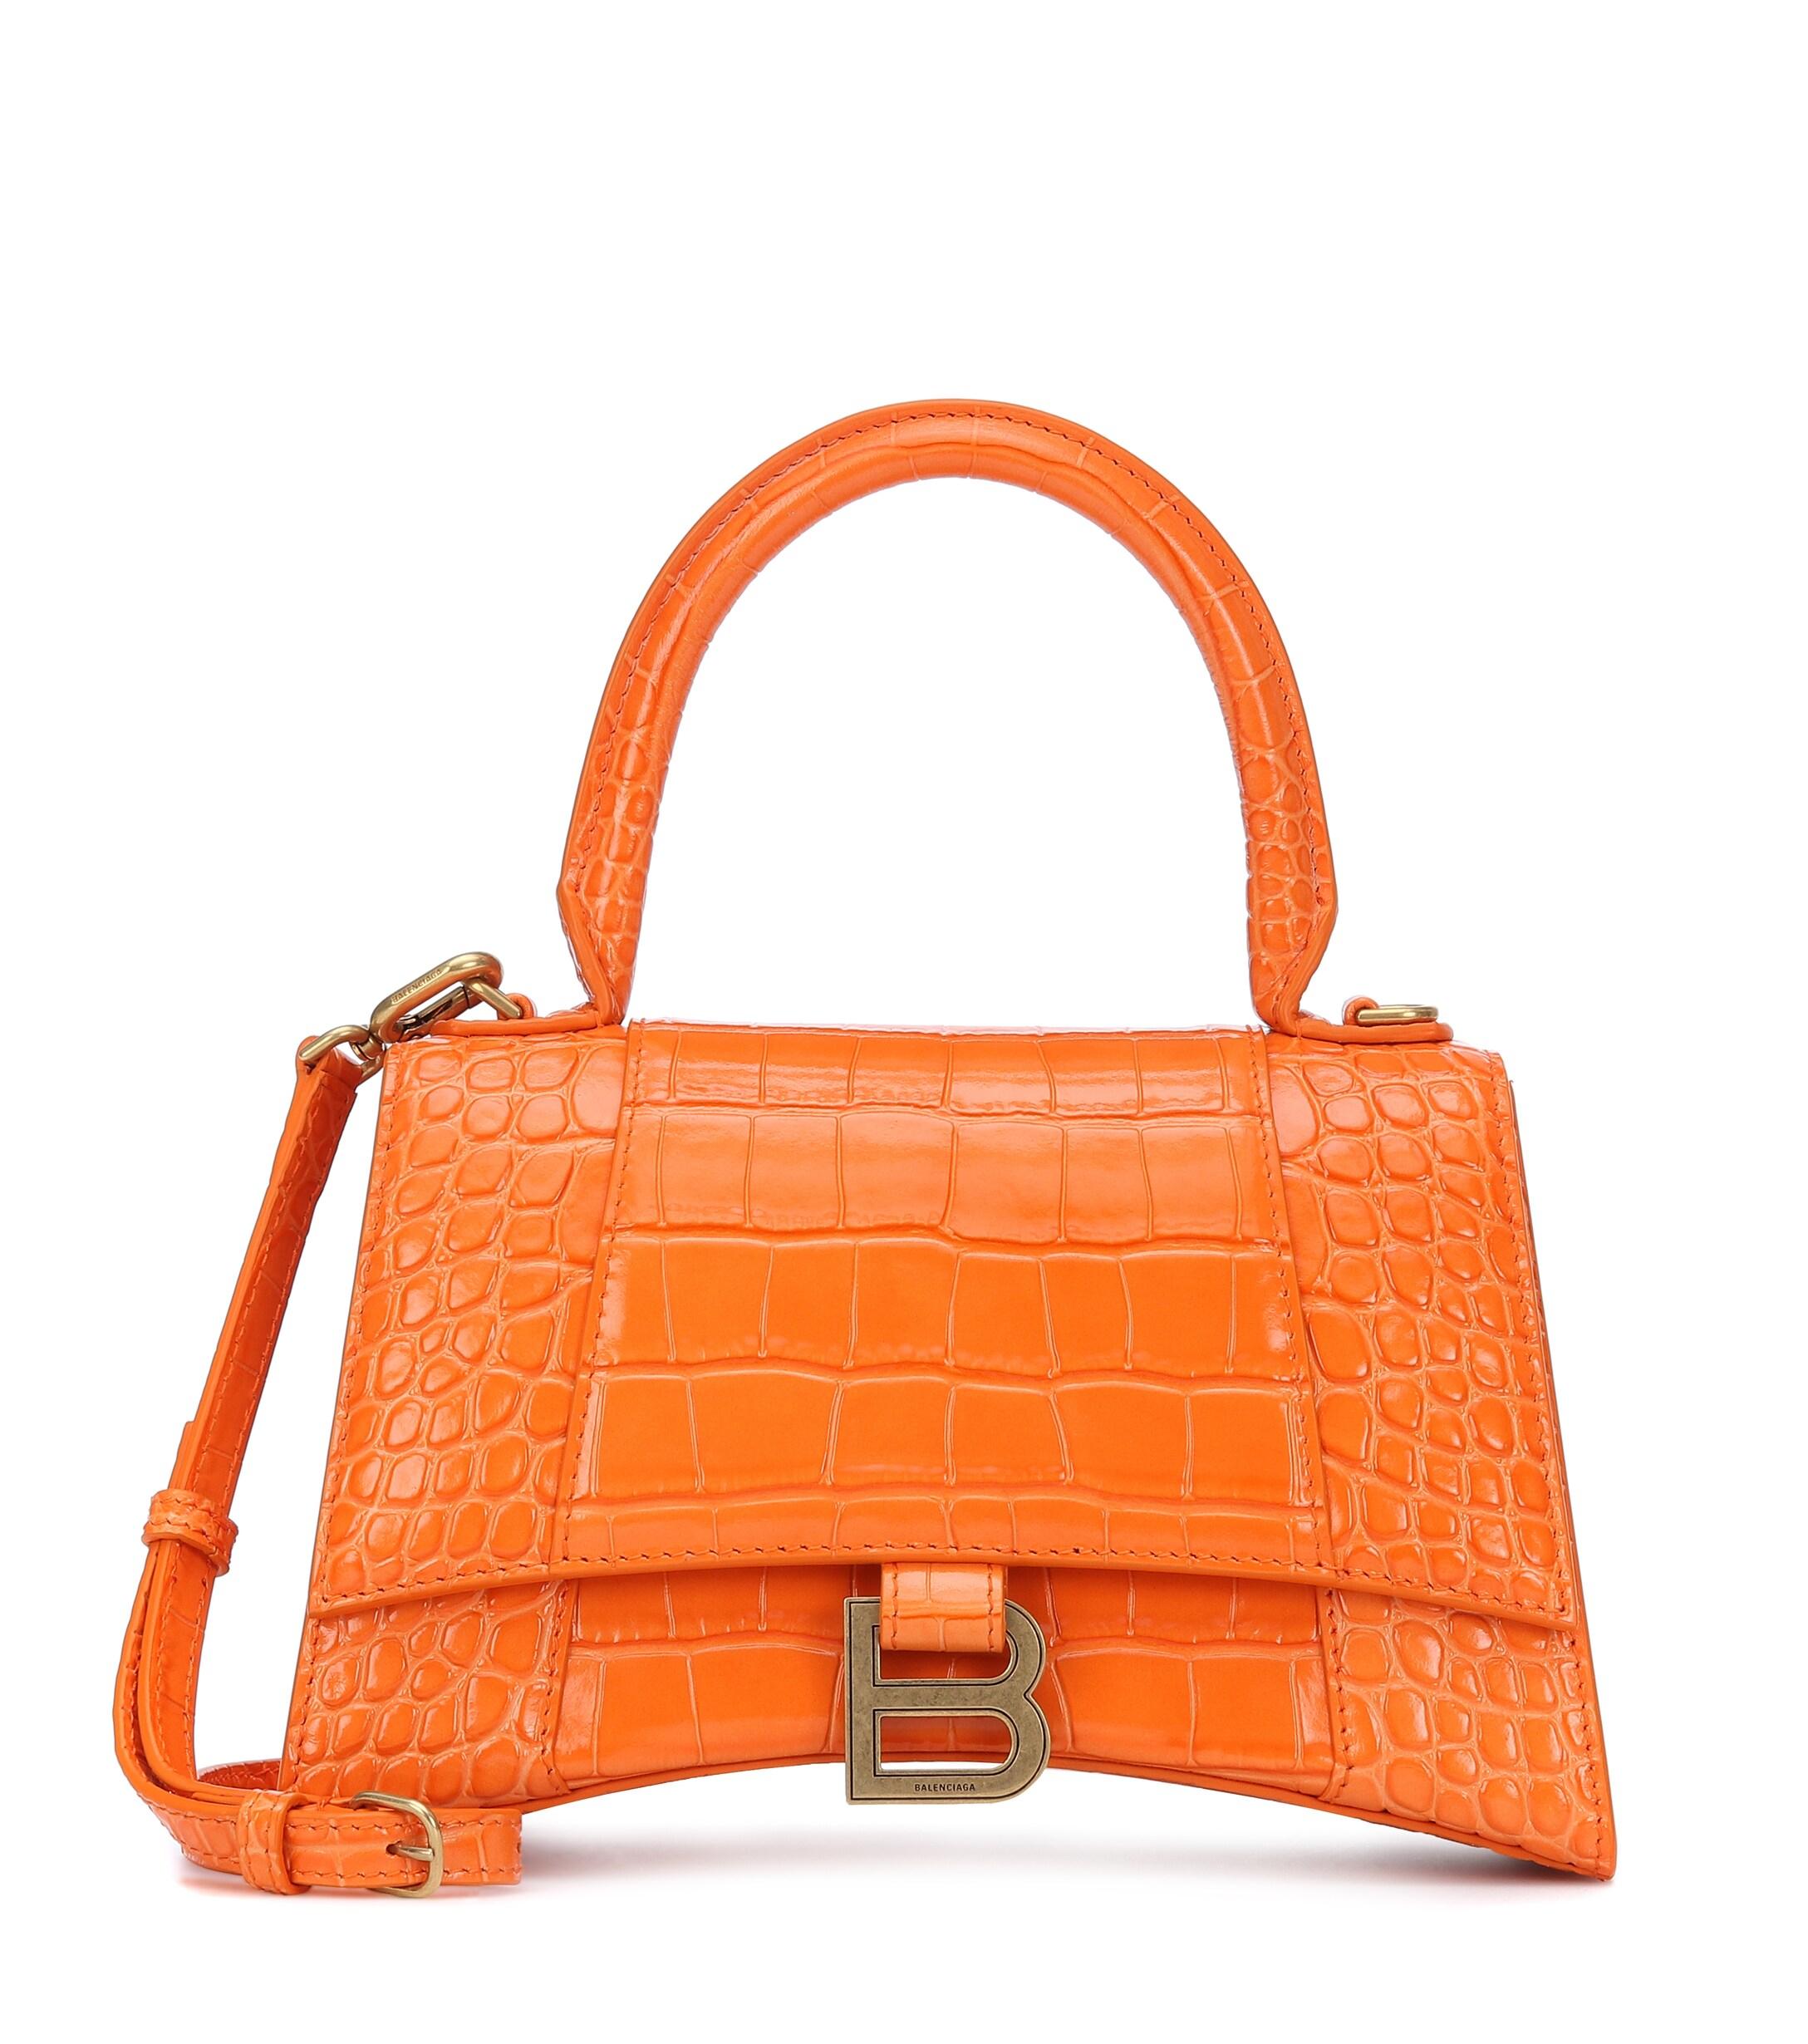 Balenciaga Hourglass Mini Leather Top Handle Bag in Orange - Lyst